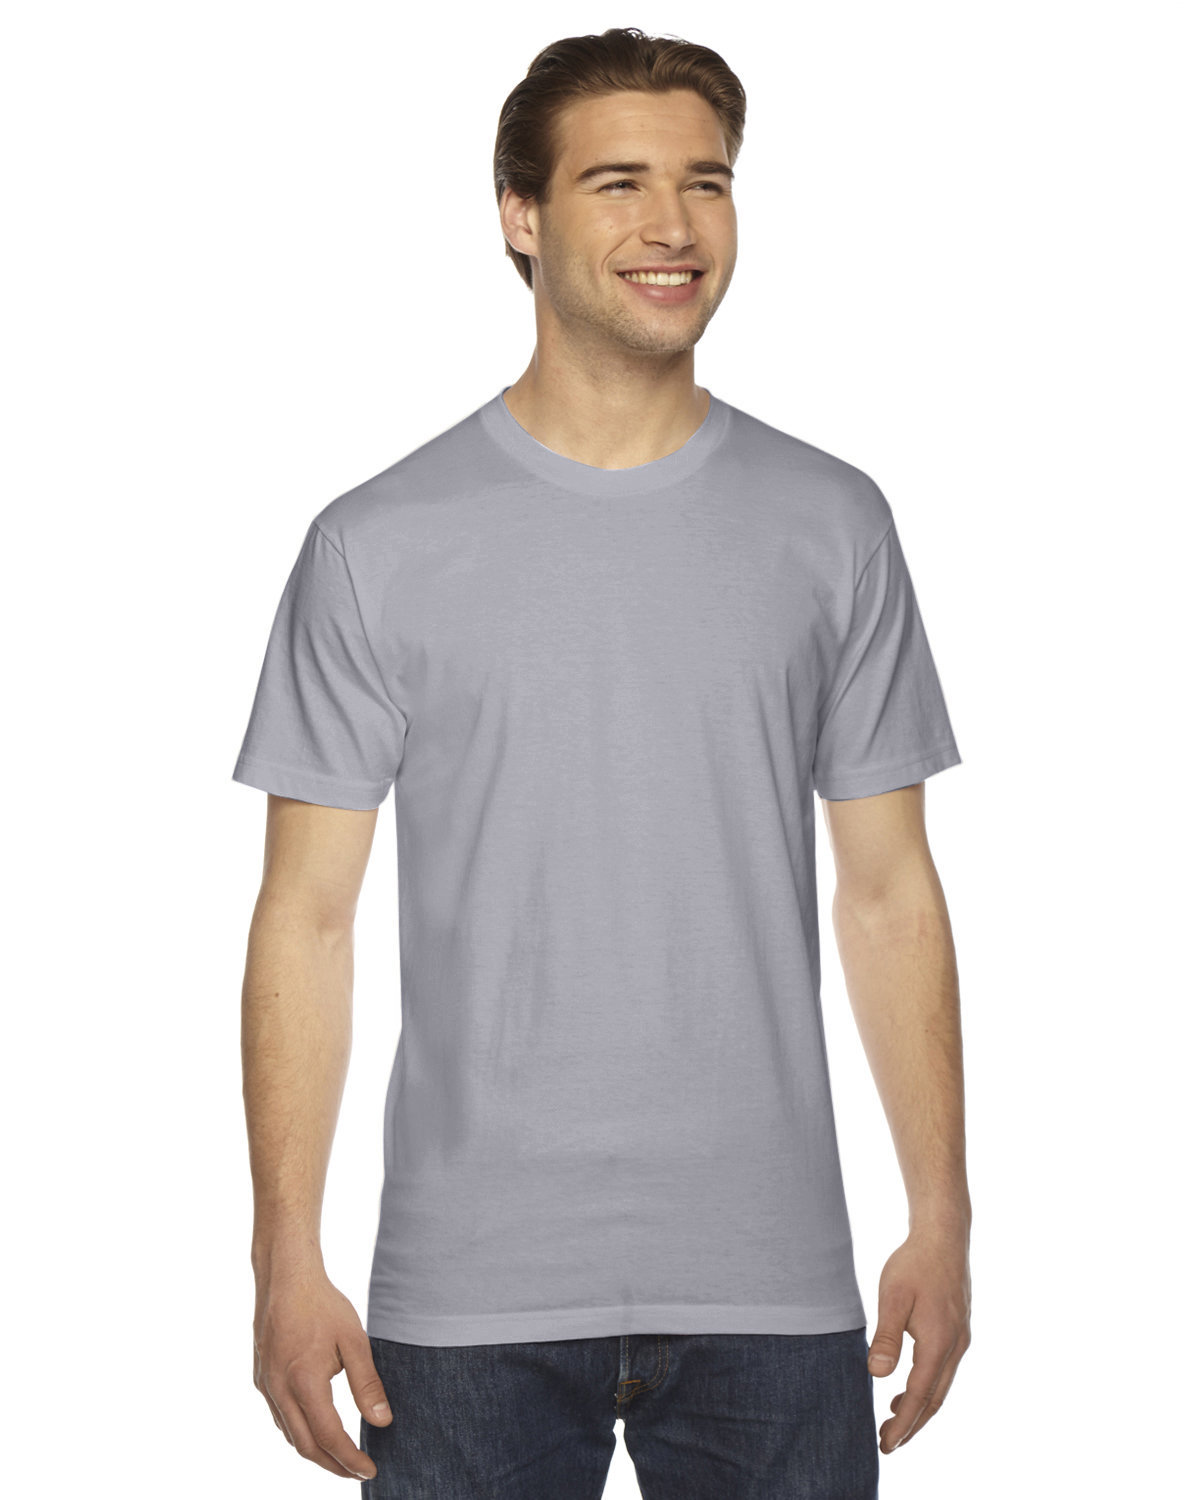 American Apparel Unisex Fine Jersey USA Made T-Shirt slate 